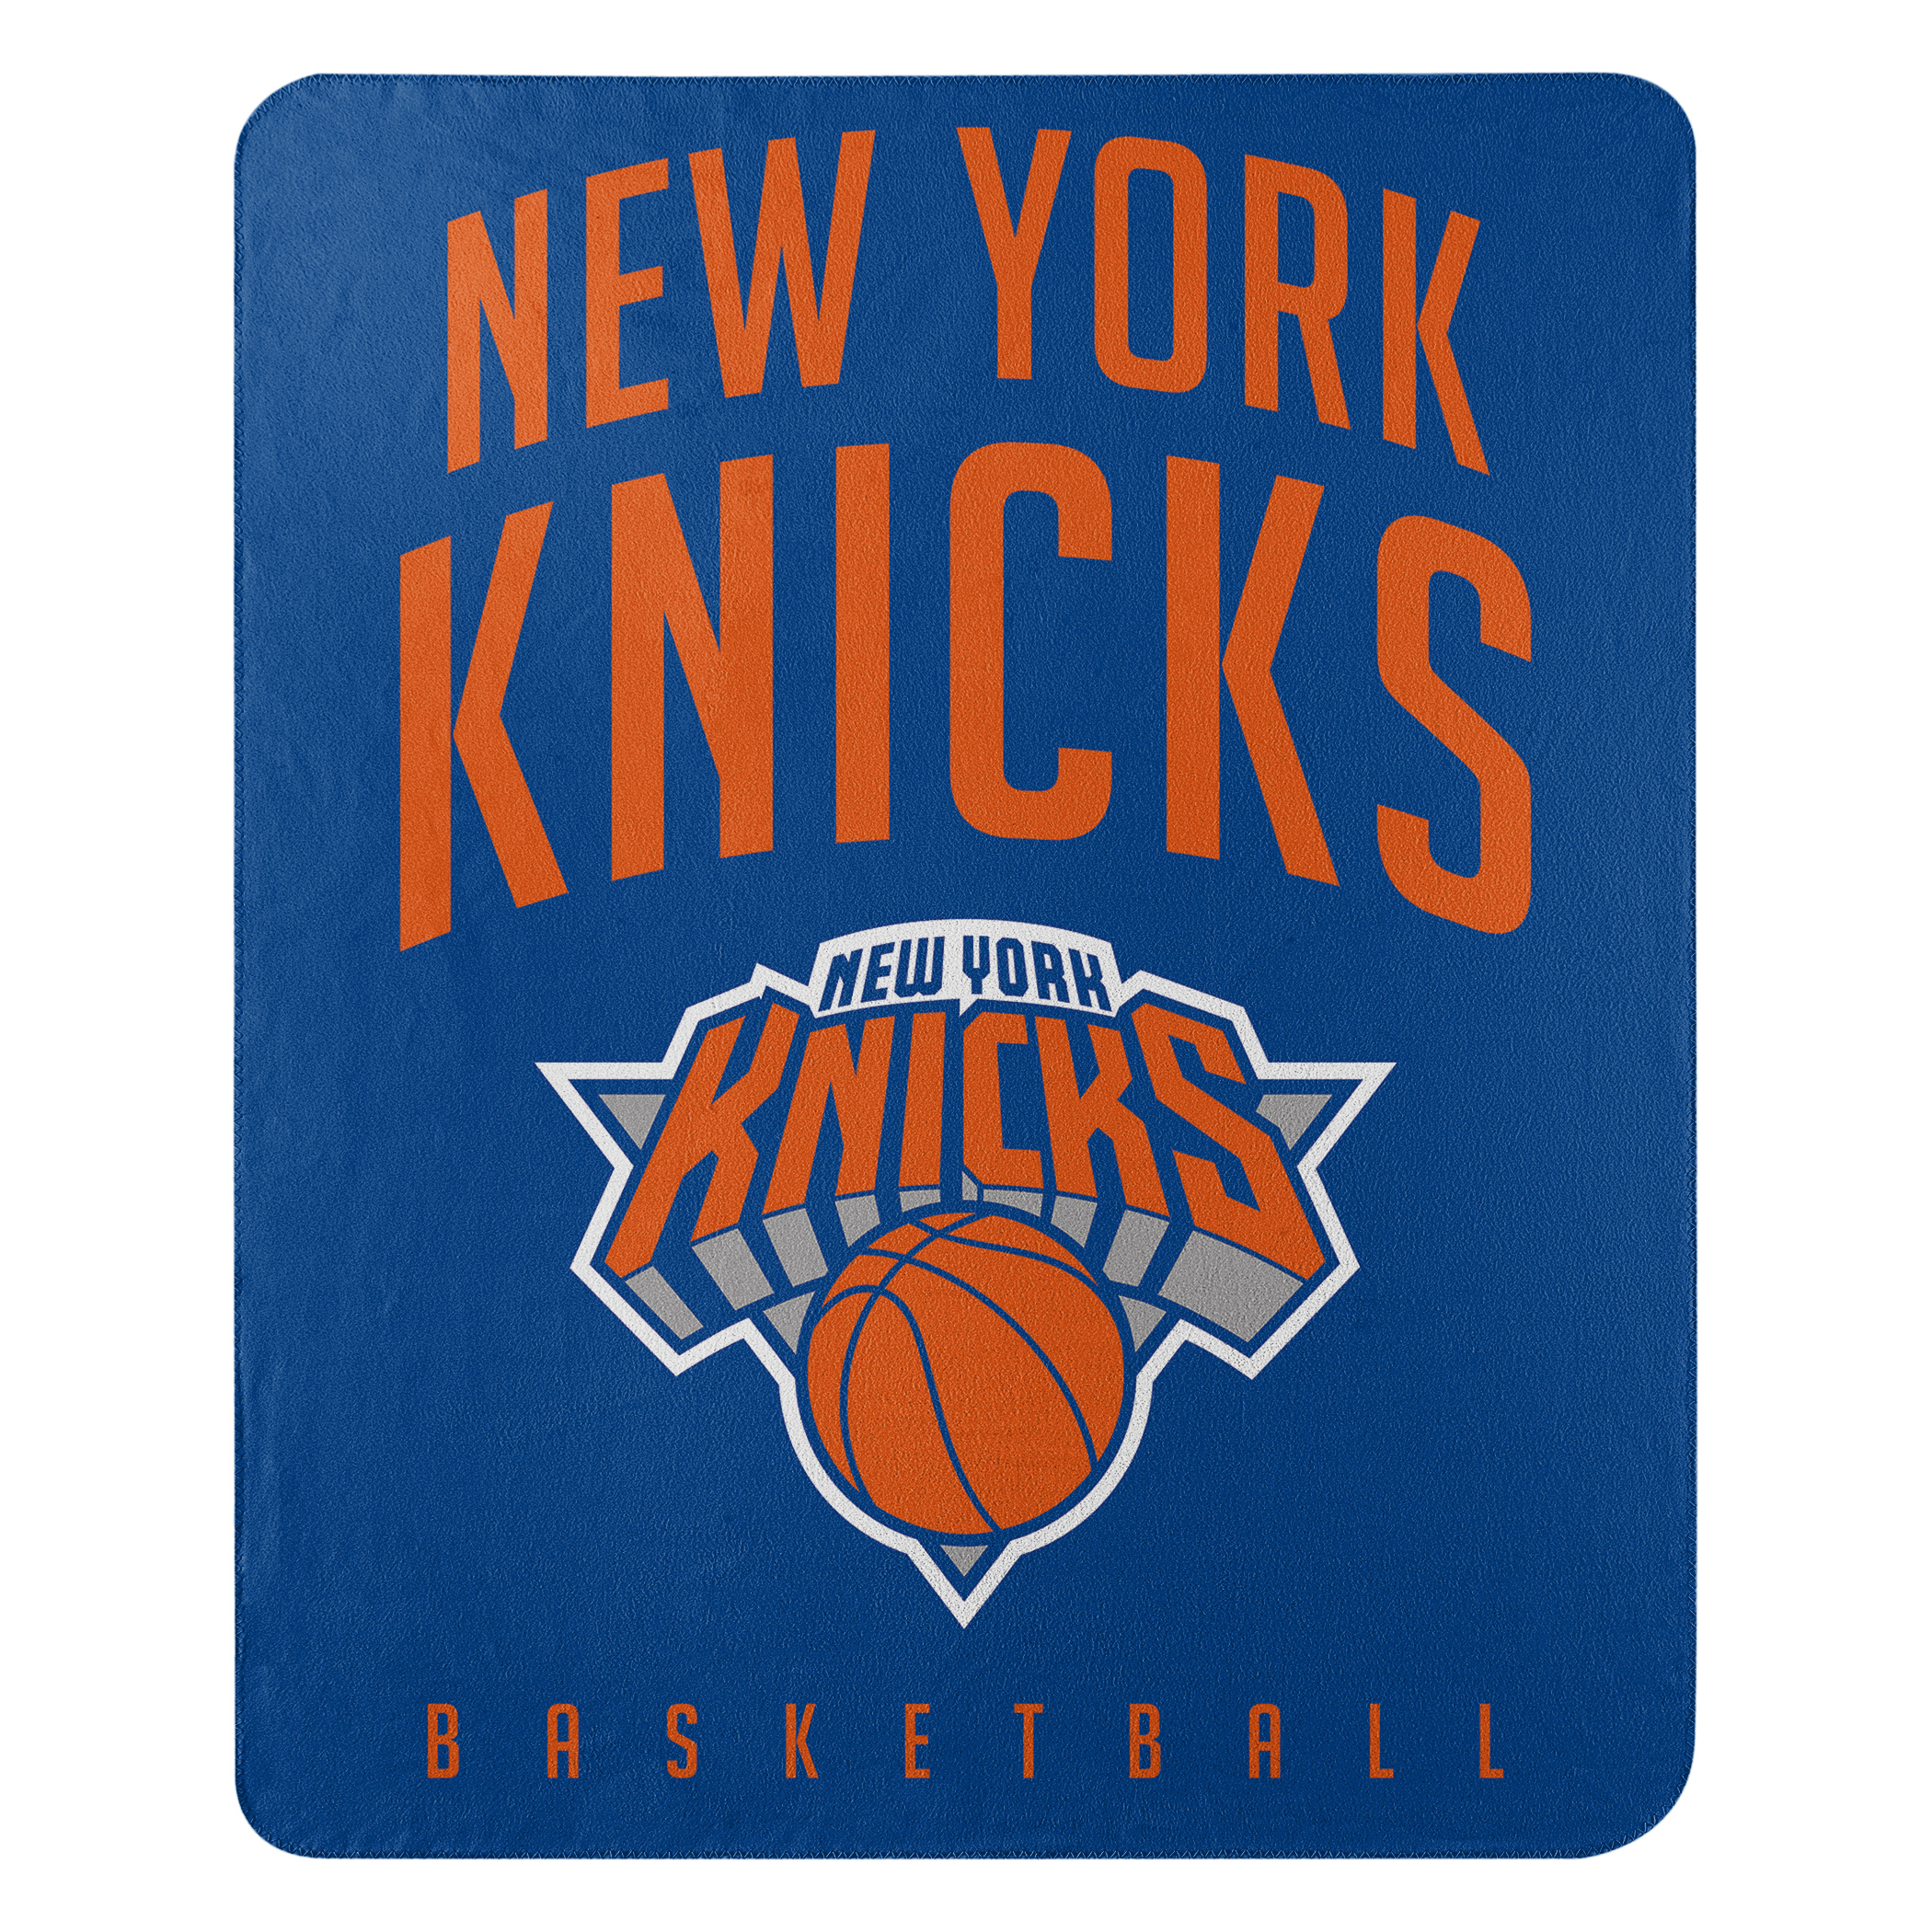 New York Knicks Blanket 50x60 Fleece Lay Up Design - Special Order